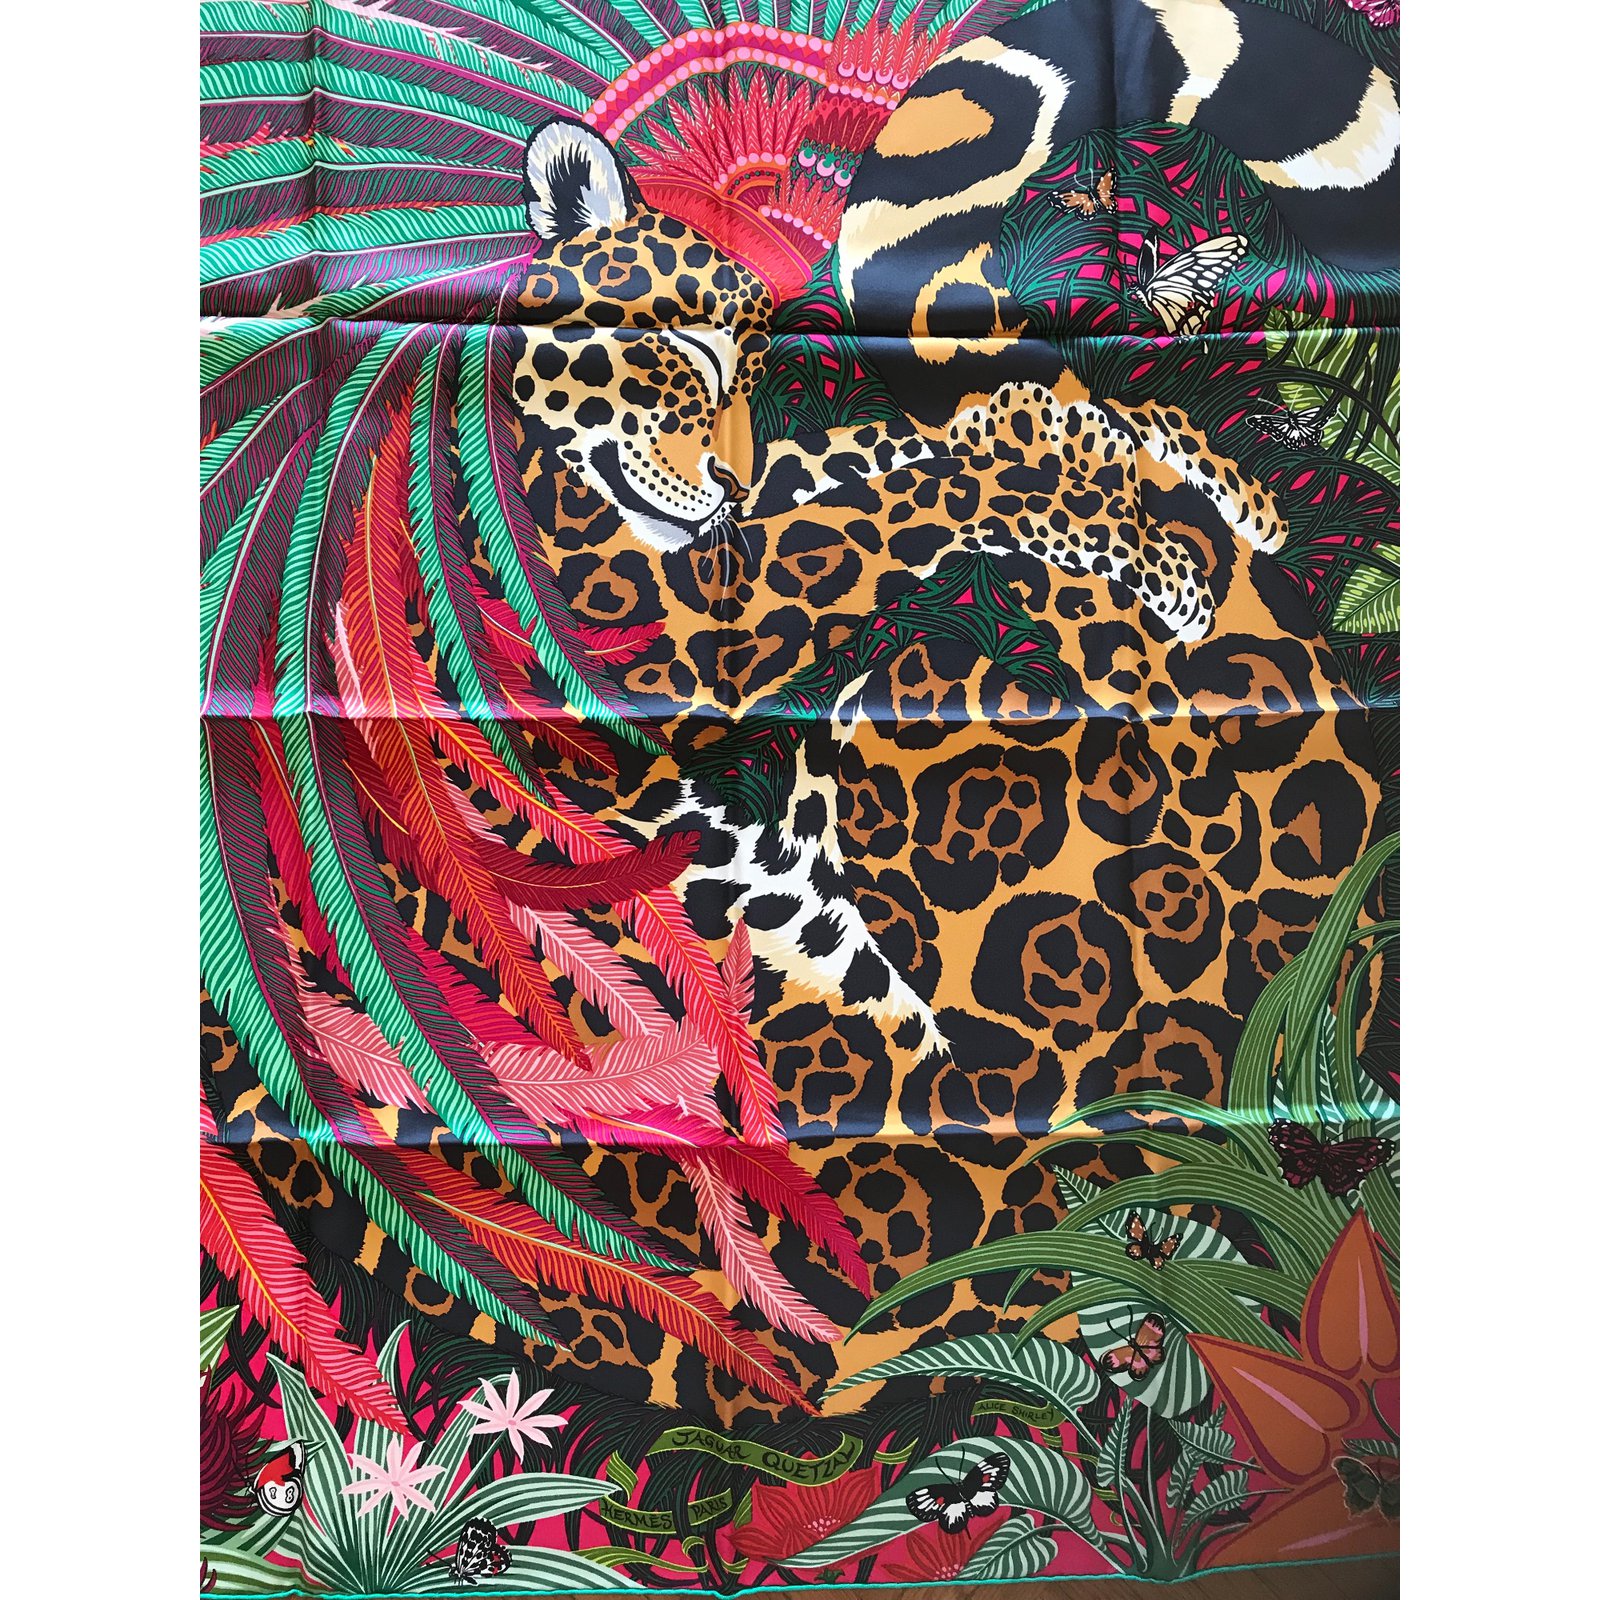 jaguar quetzal scarf 90